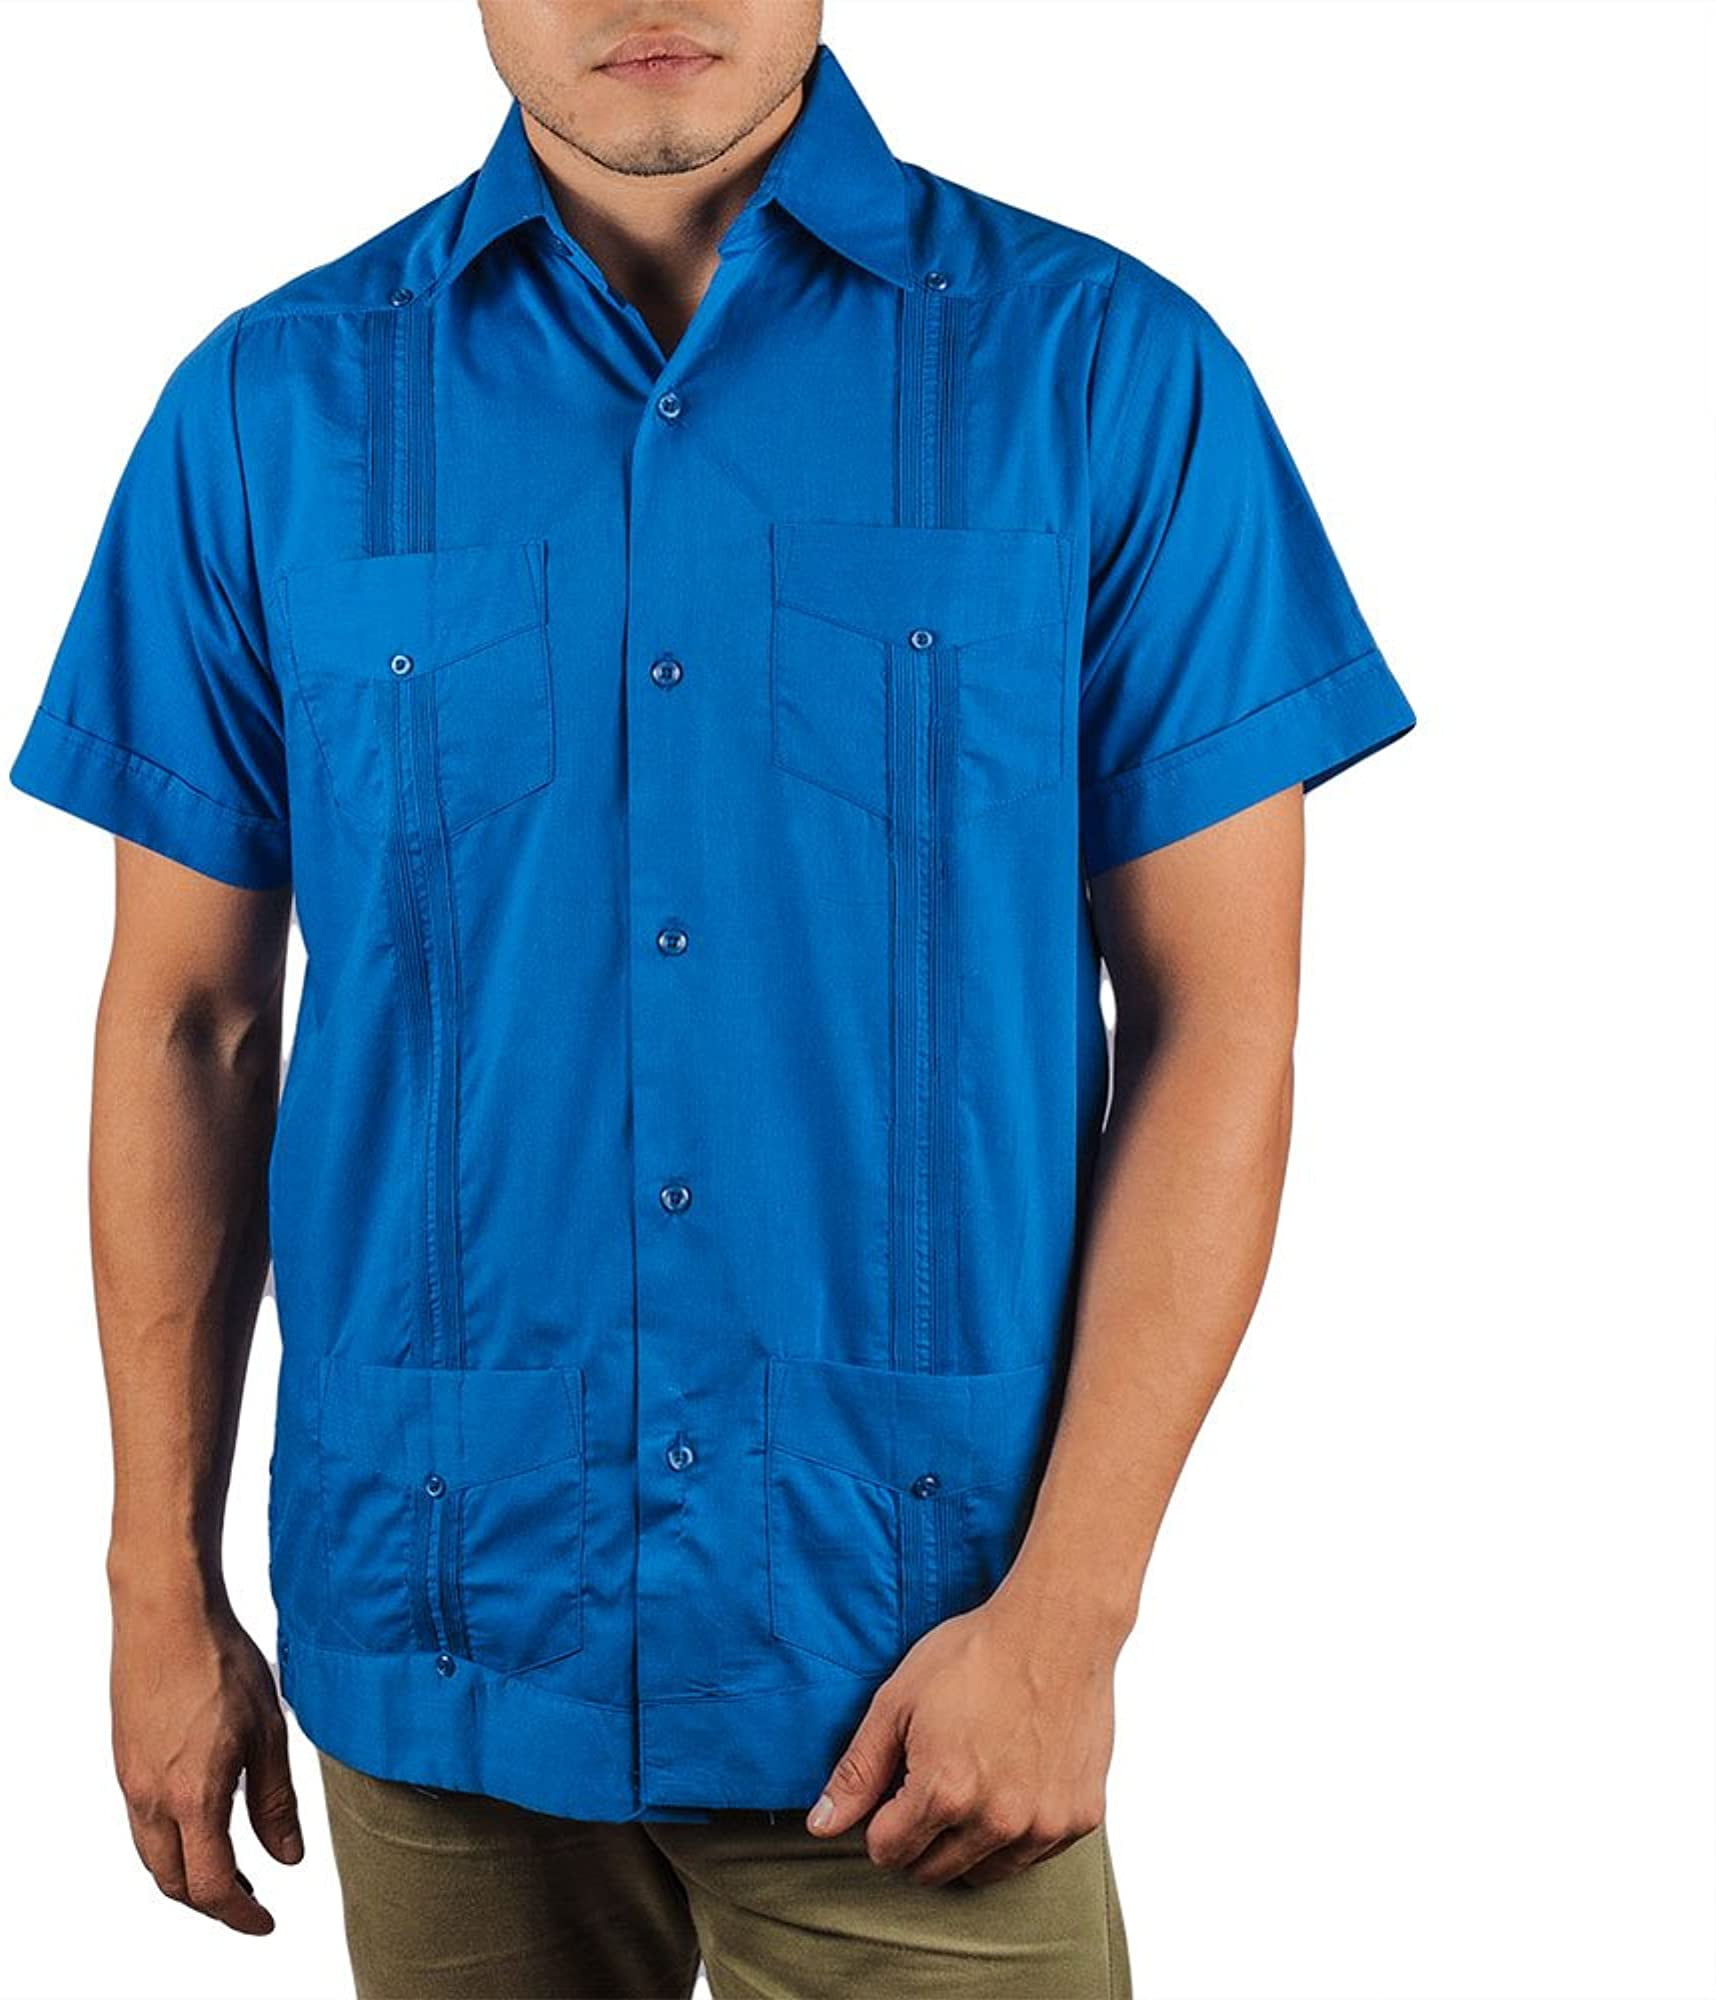 MYCUBANSTORE.COM Authentic Guayabera Basic Men’s Short Sleeve Shirt Cotton Blend 